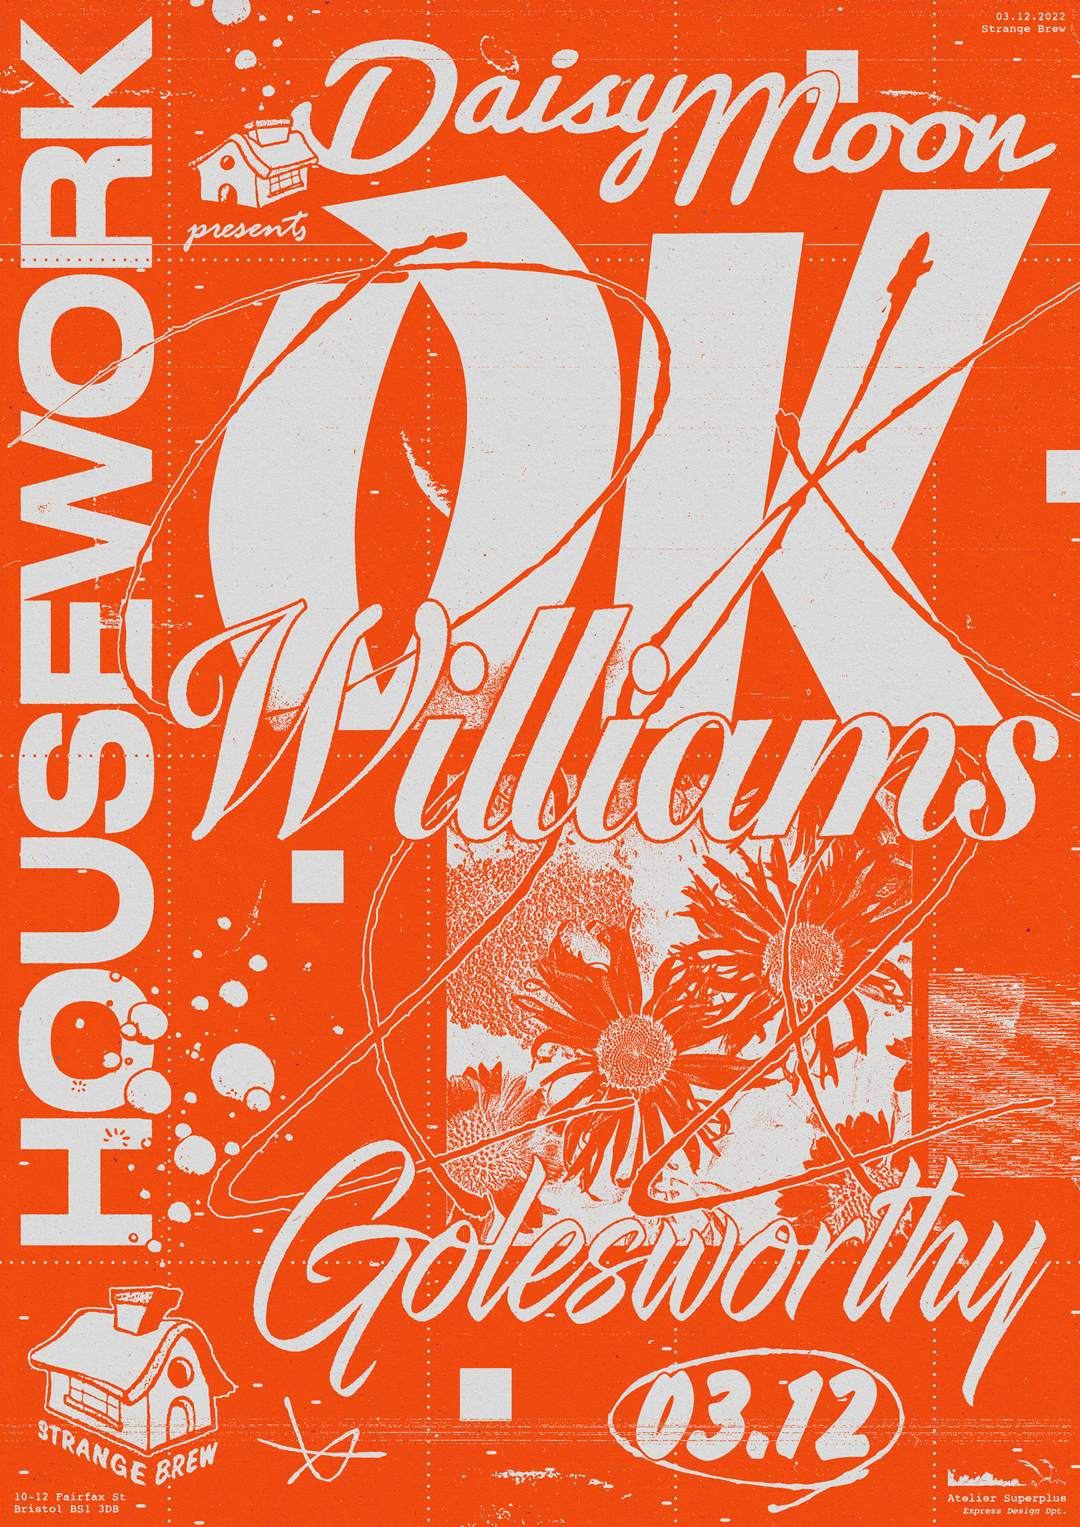 Housework with OK Williams, Daisy Moon & Golesworthy - フライヤー表